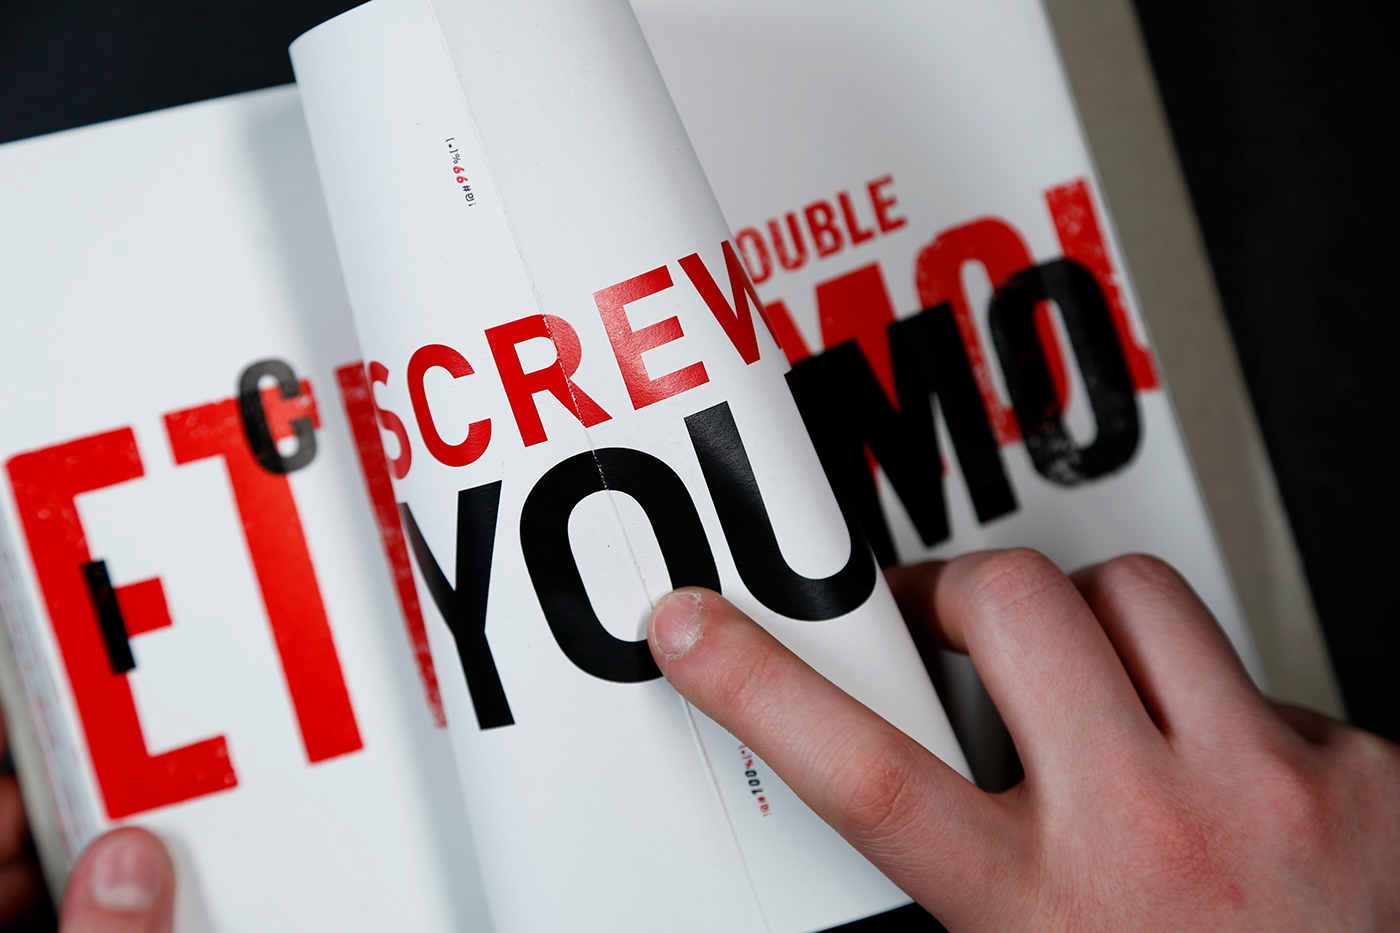 taboo istd hand gestures Obscene offensive vulgar PG18 publication print letterpress hardcover type